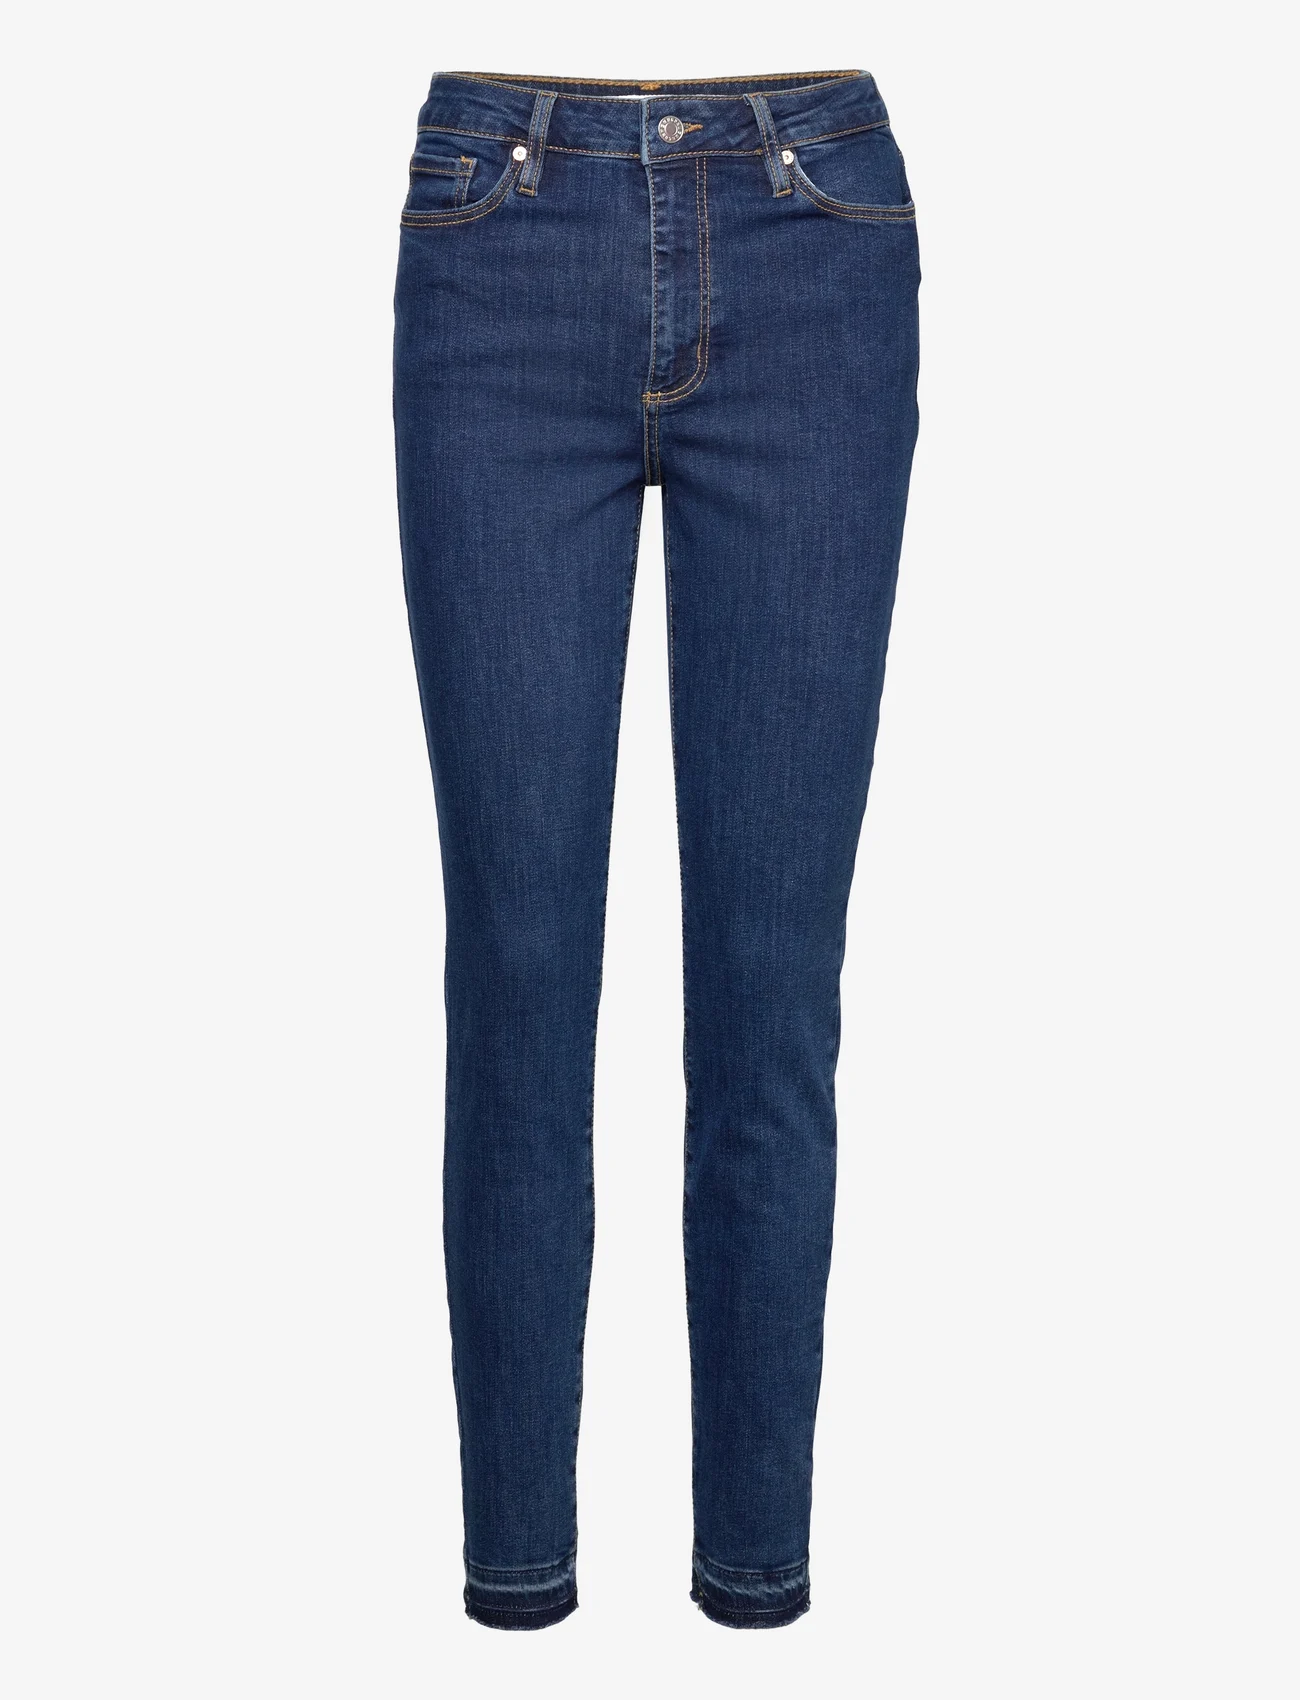 Mango - High-rise skinny jeans - skinny jeans - open blue - 0